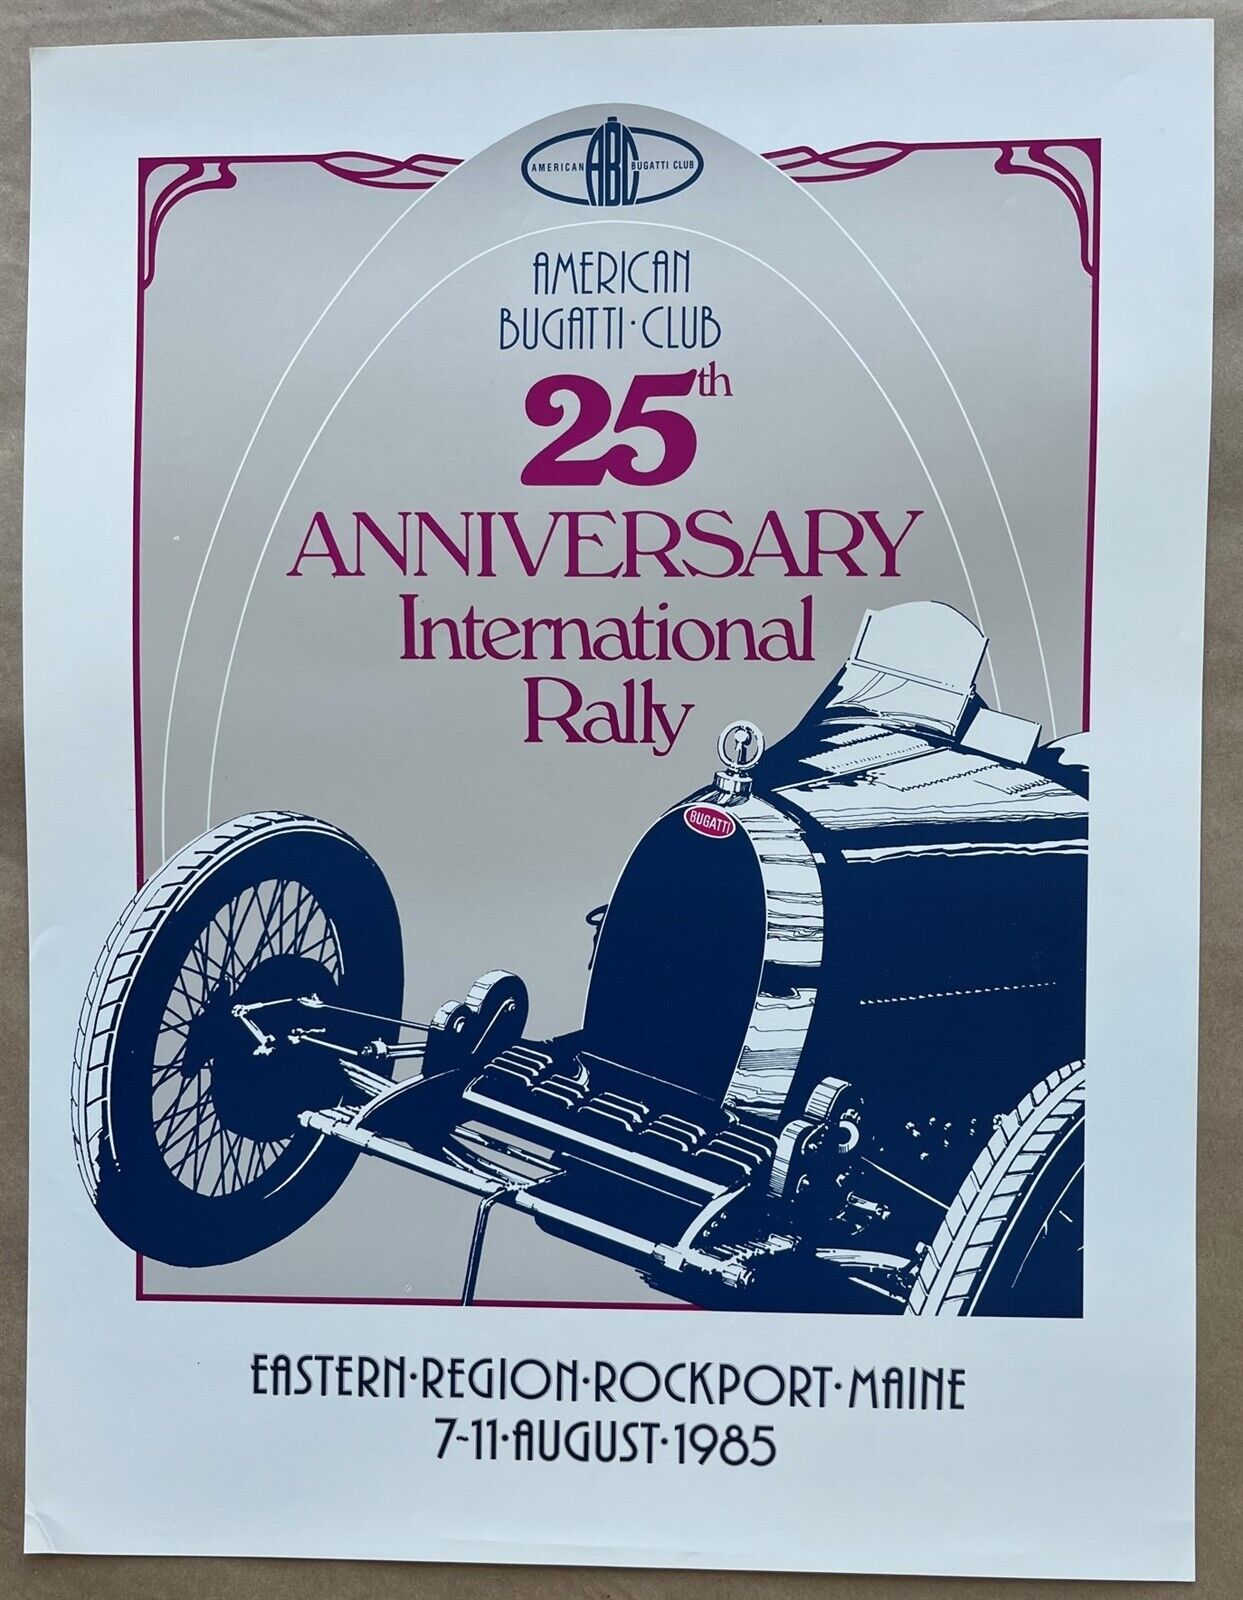 Poster 1985 American Bugatti Club 25th Anniversary International Rally